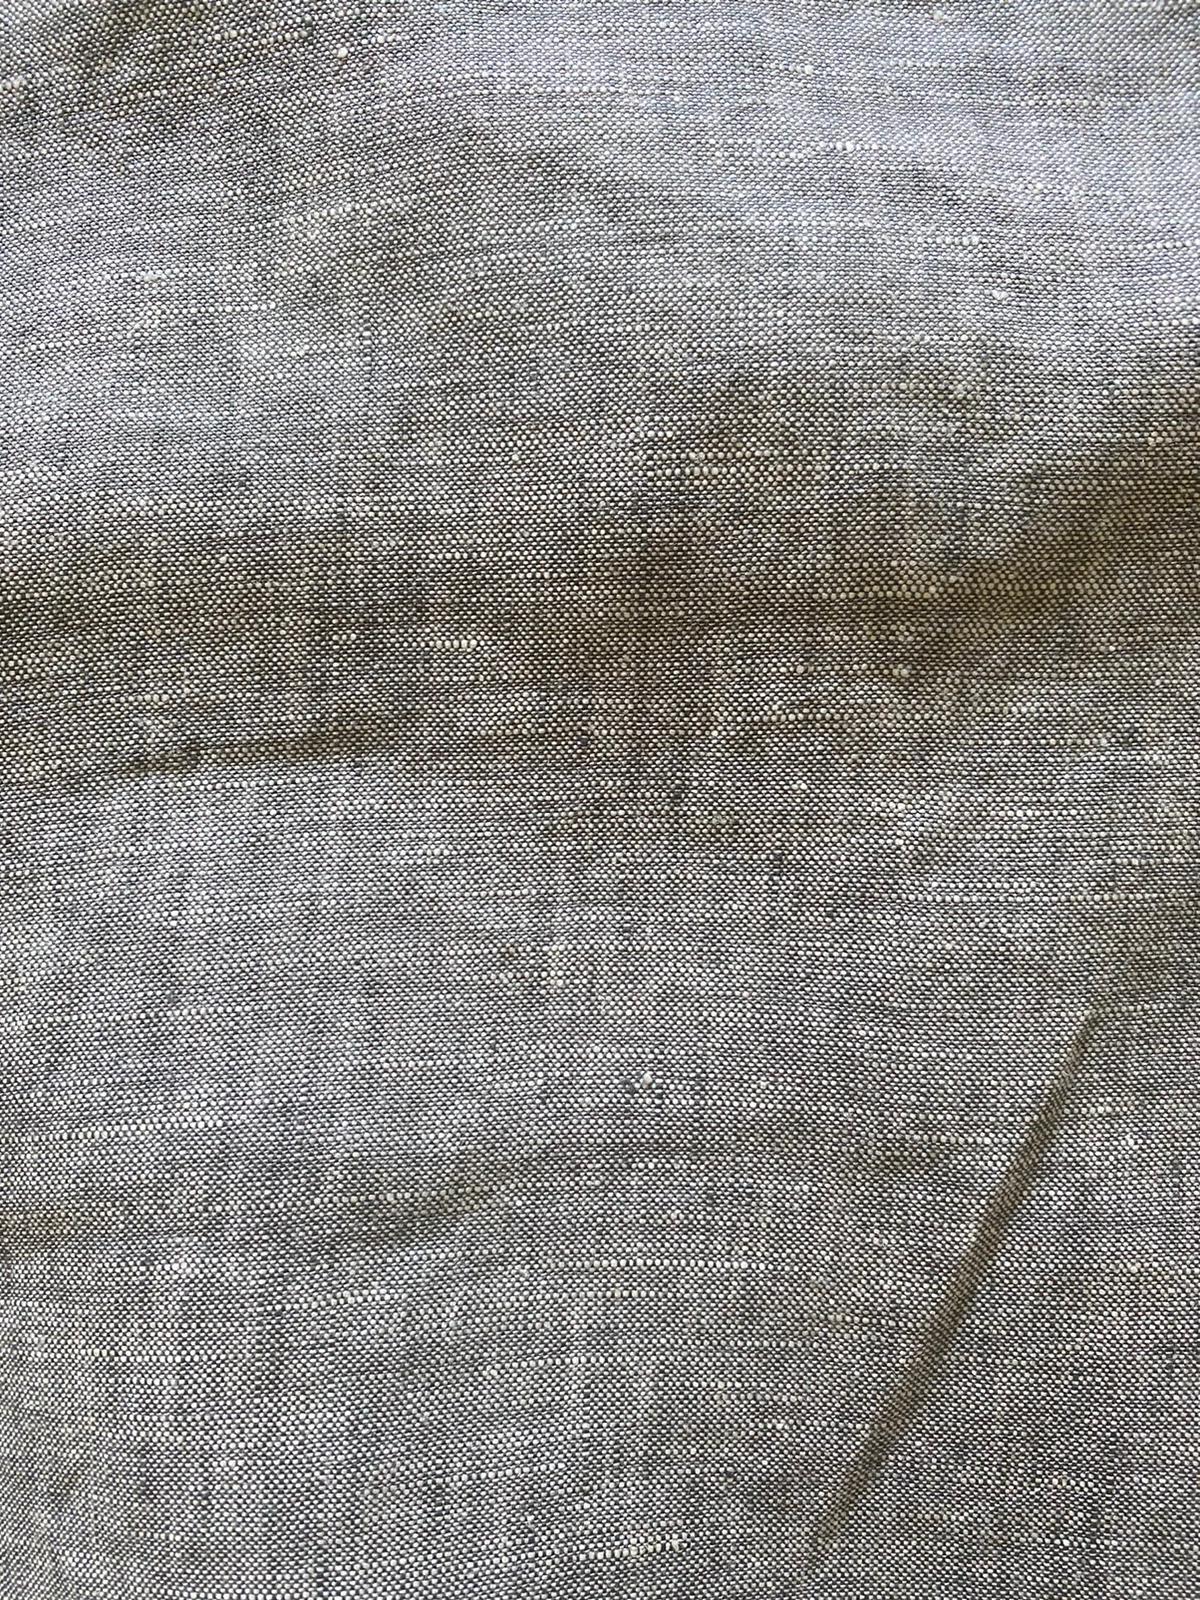 100% Organic Natural French Linen 4 Piece Double Duvet Set - Denim Grey